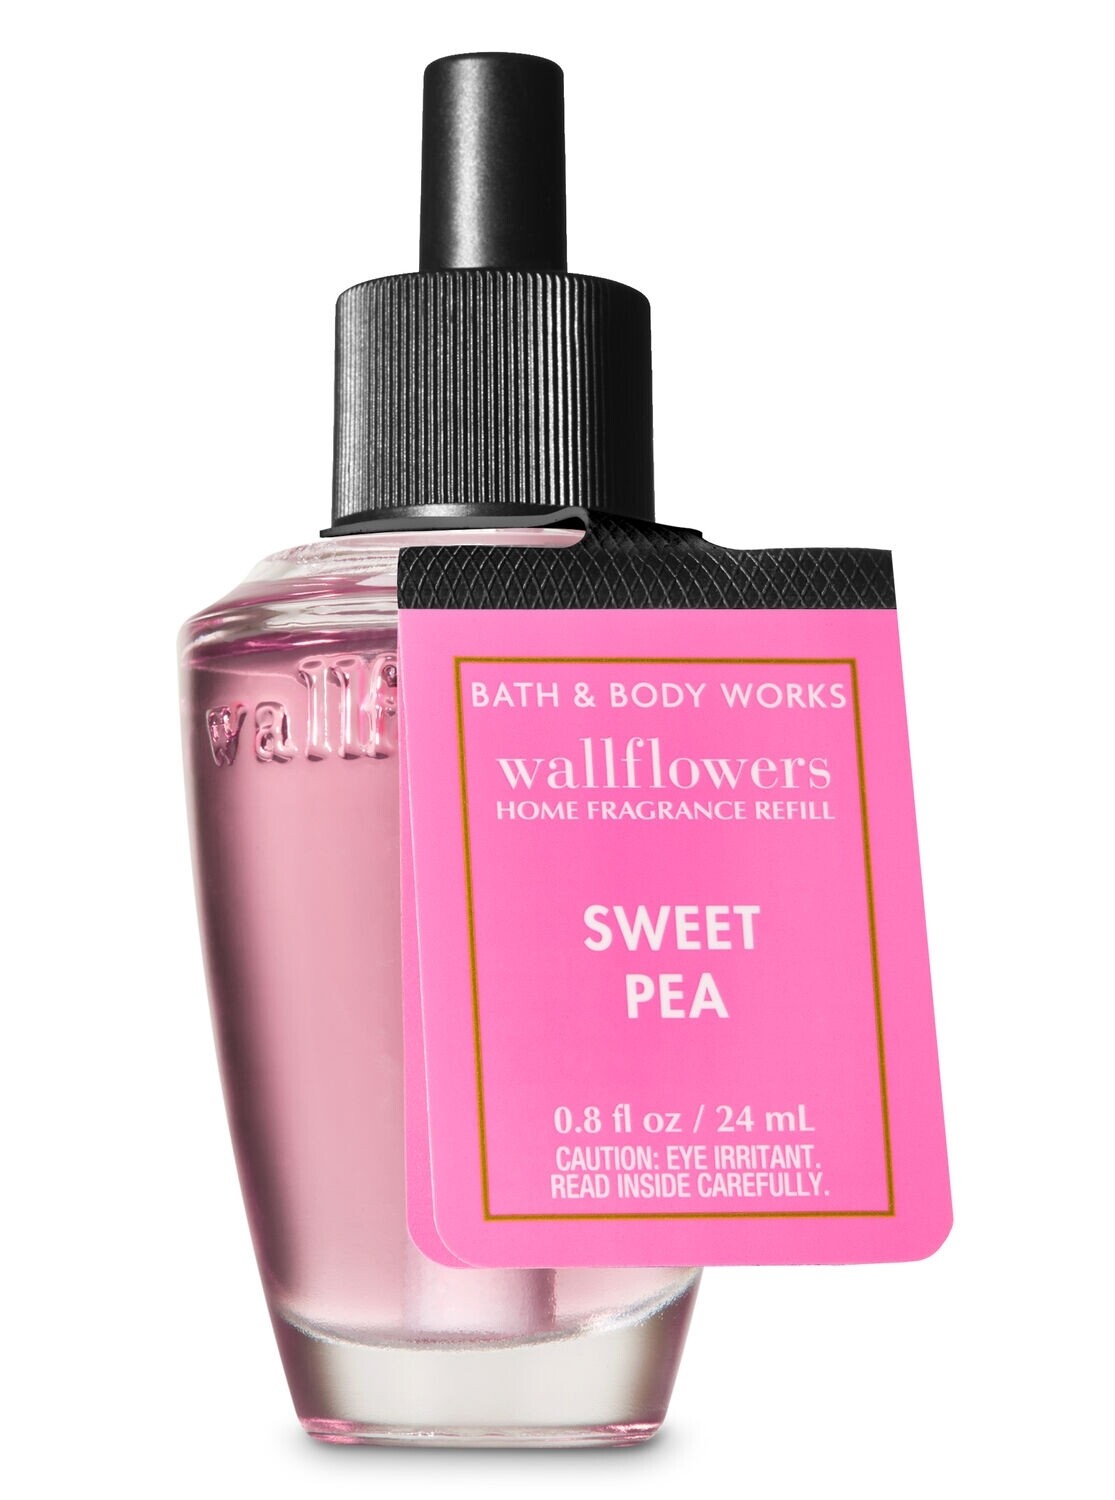 Bath and body works wallflower refill- sweet pea 